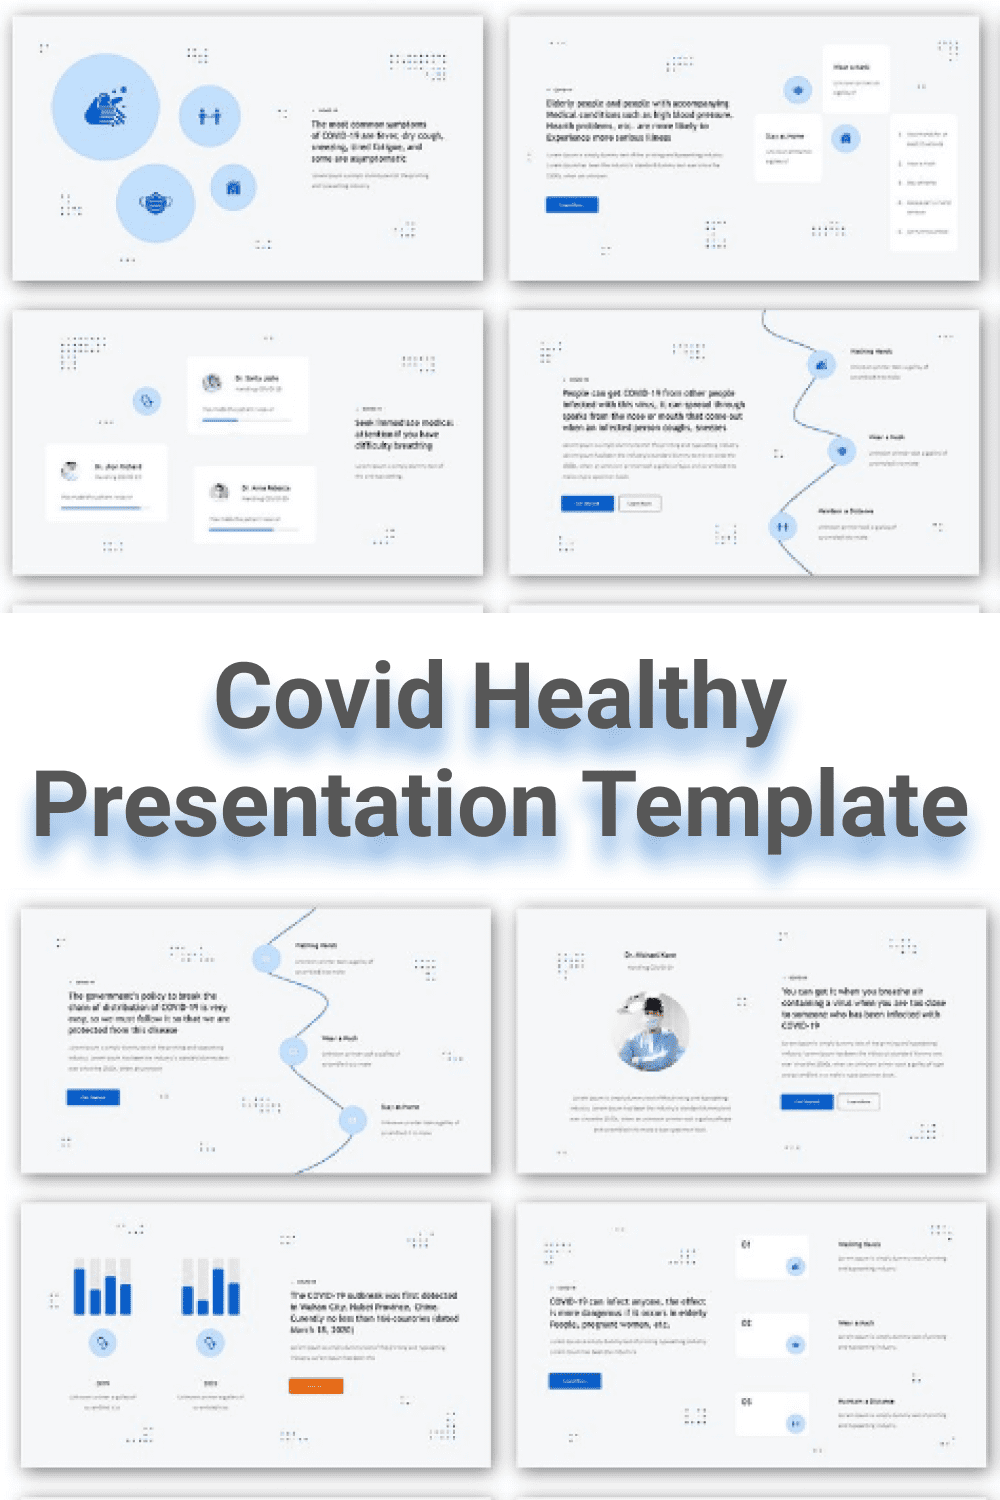 Covid Healthy Presentation Template Pinterest.